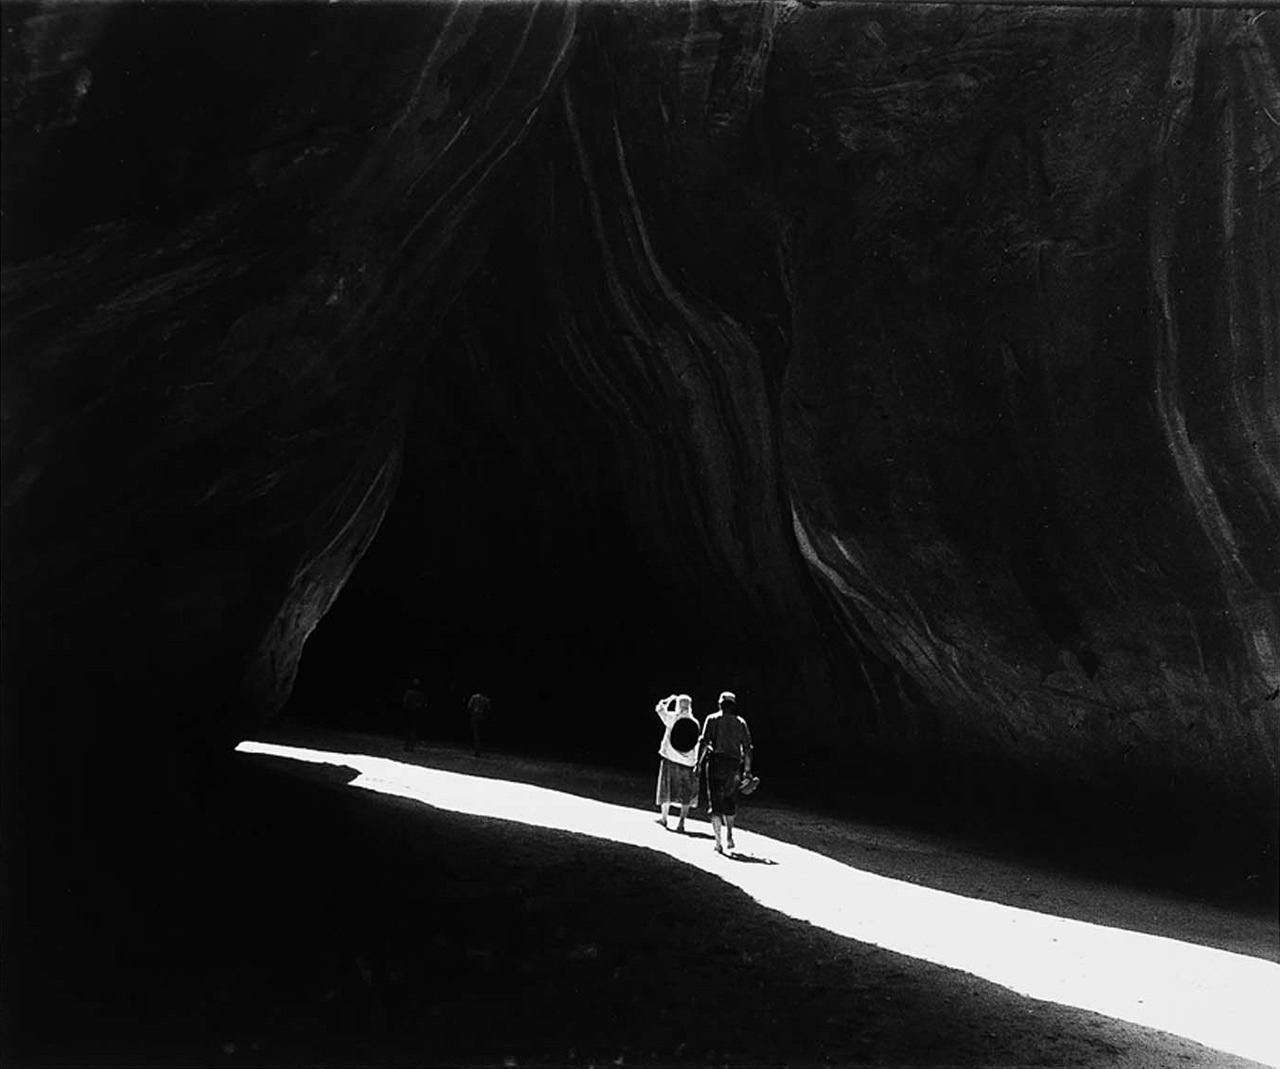 Georgia O'Keeffe, Glen Canyon photo by Todd Webb, 1961